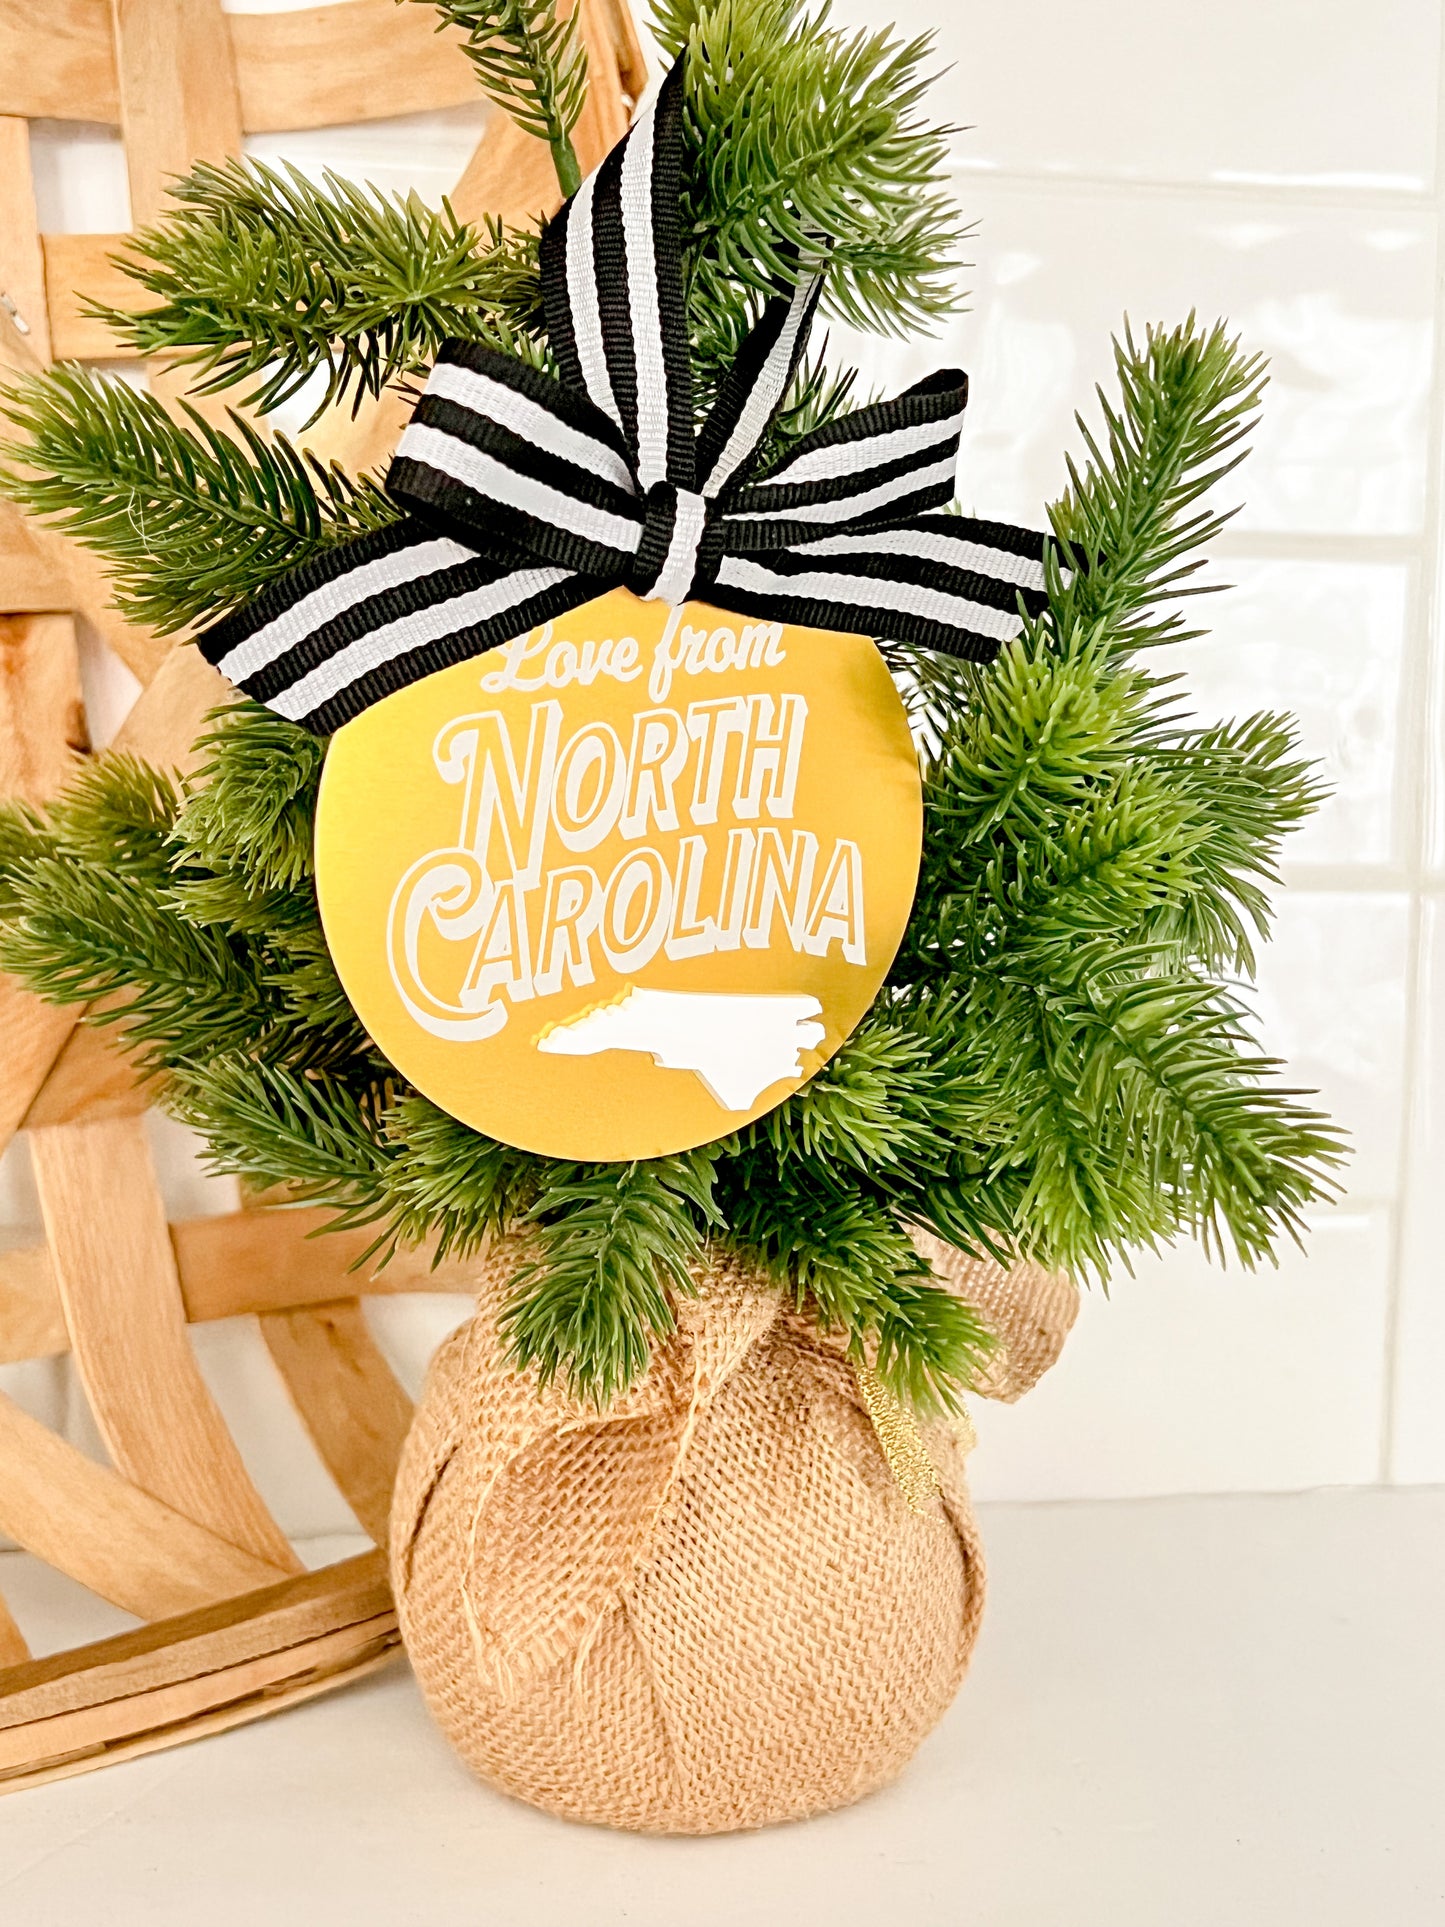 Love From North Carolina Ornament